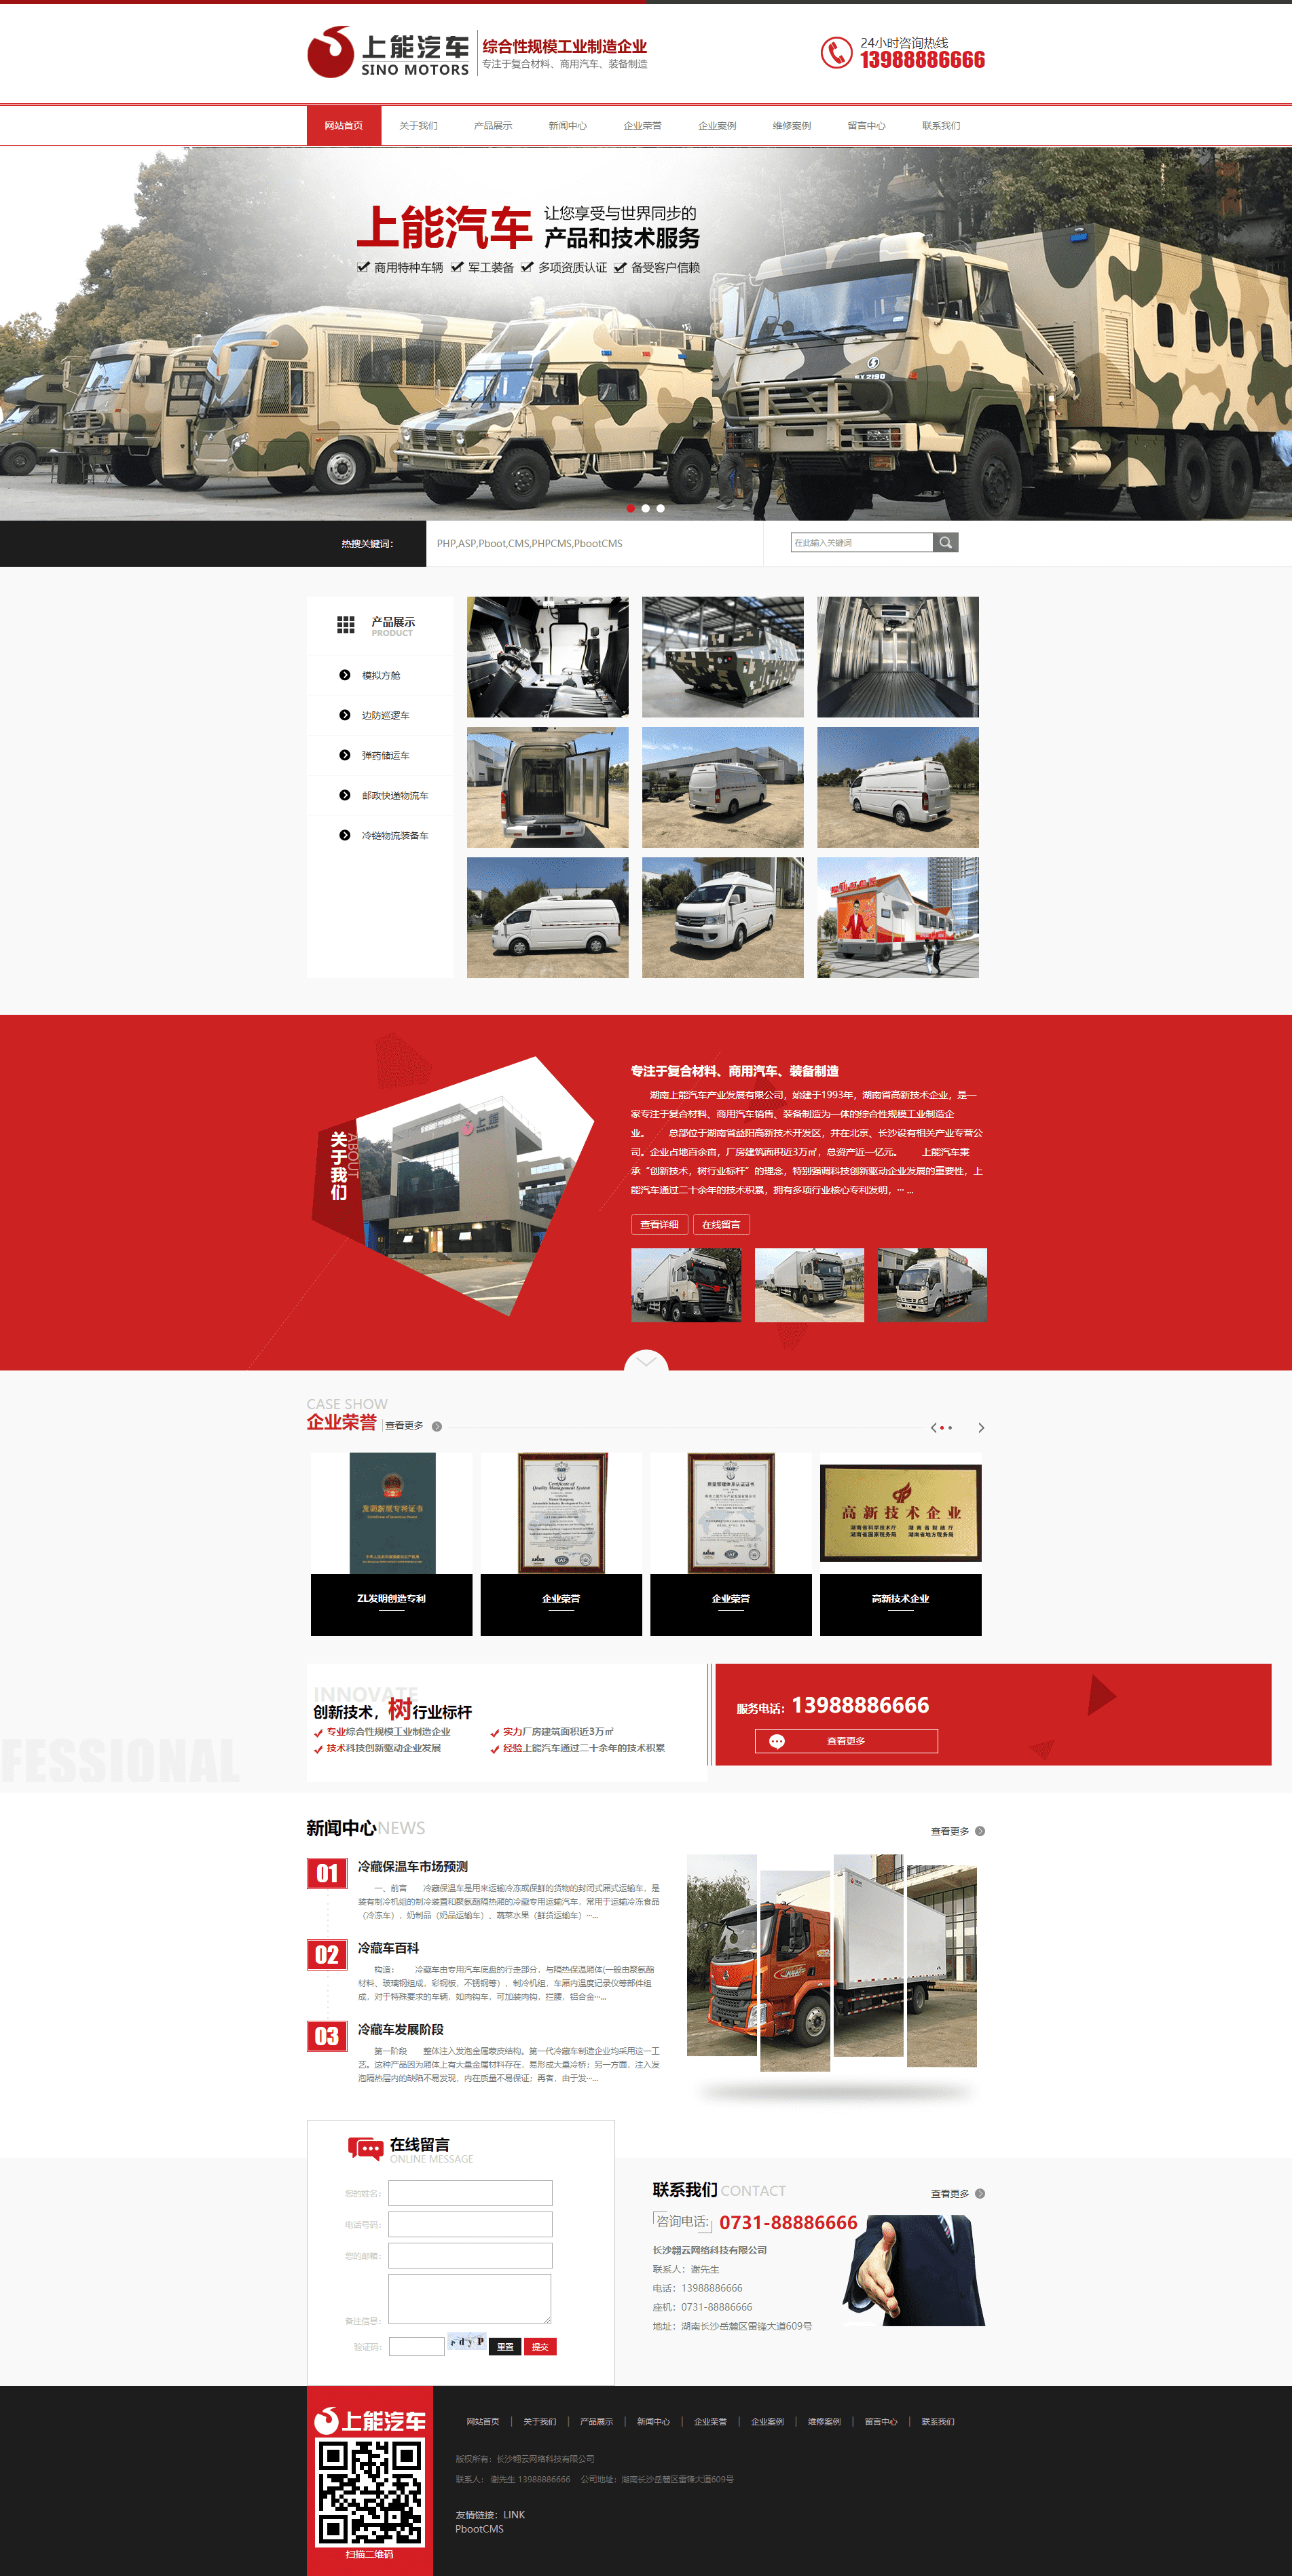 Pbootcms二手汽车买卖租赁网站模板